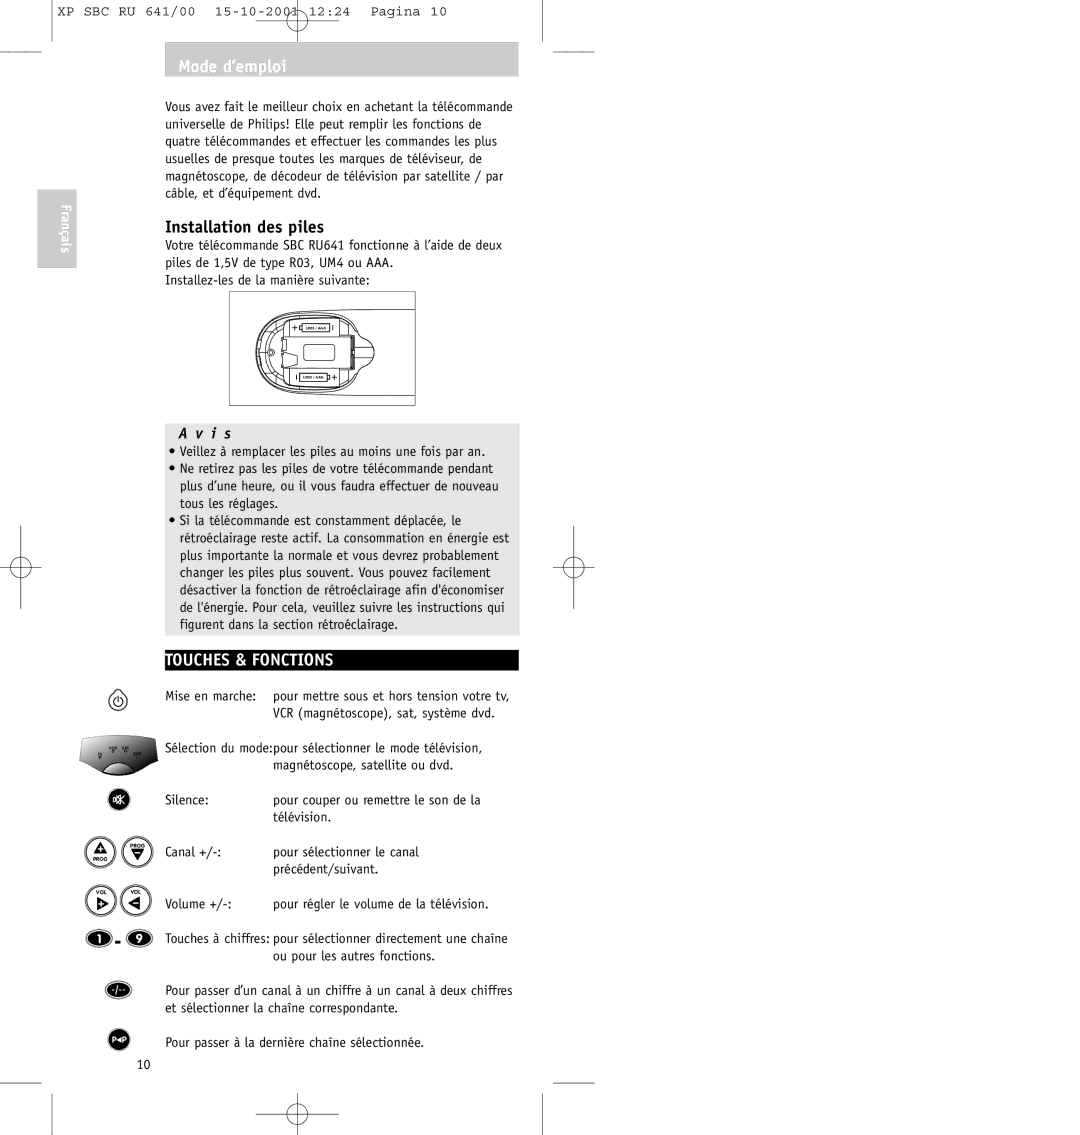 Philips SBC RU641/00 manual Mode d’emploi, Installation des piles, Touches & Fonctions, Silence, Télévision 